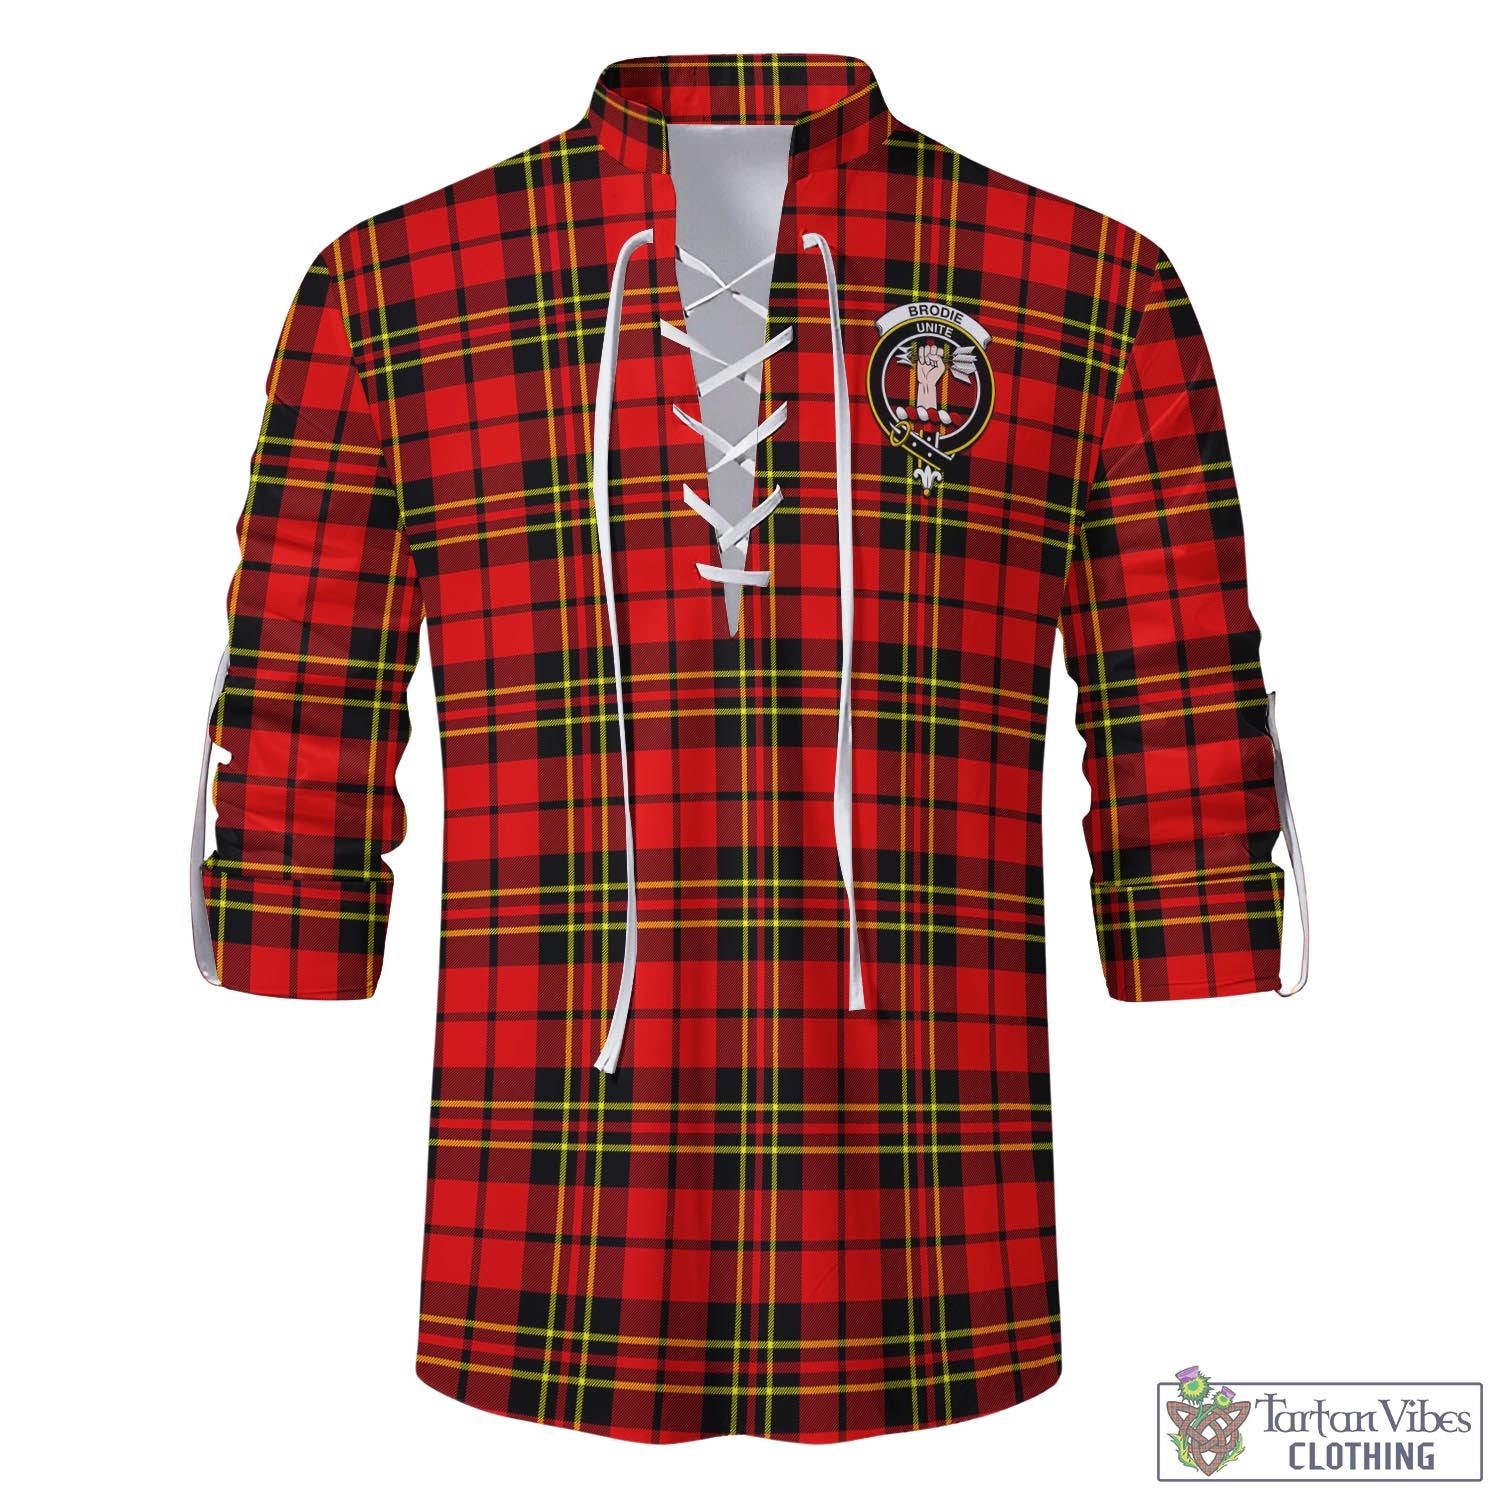 Tartan Vibes Clothing Brodie Modern Tartan Men's Scottish Traditional Jacobite Ghillie Kilt Shirt with Family Crest